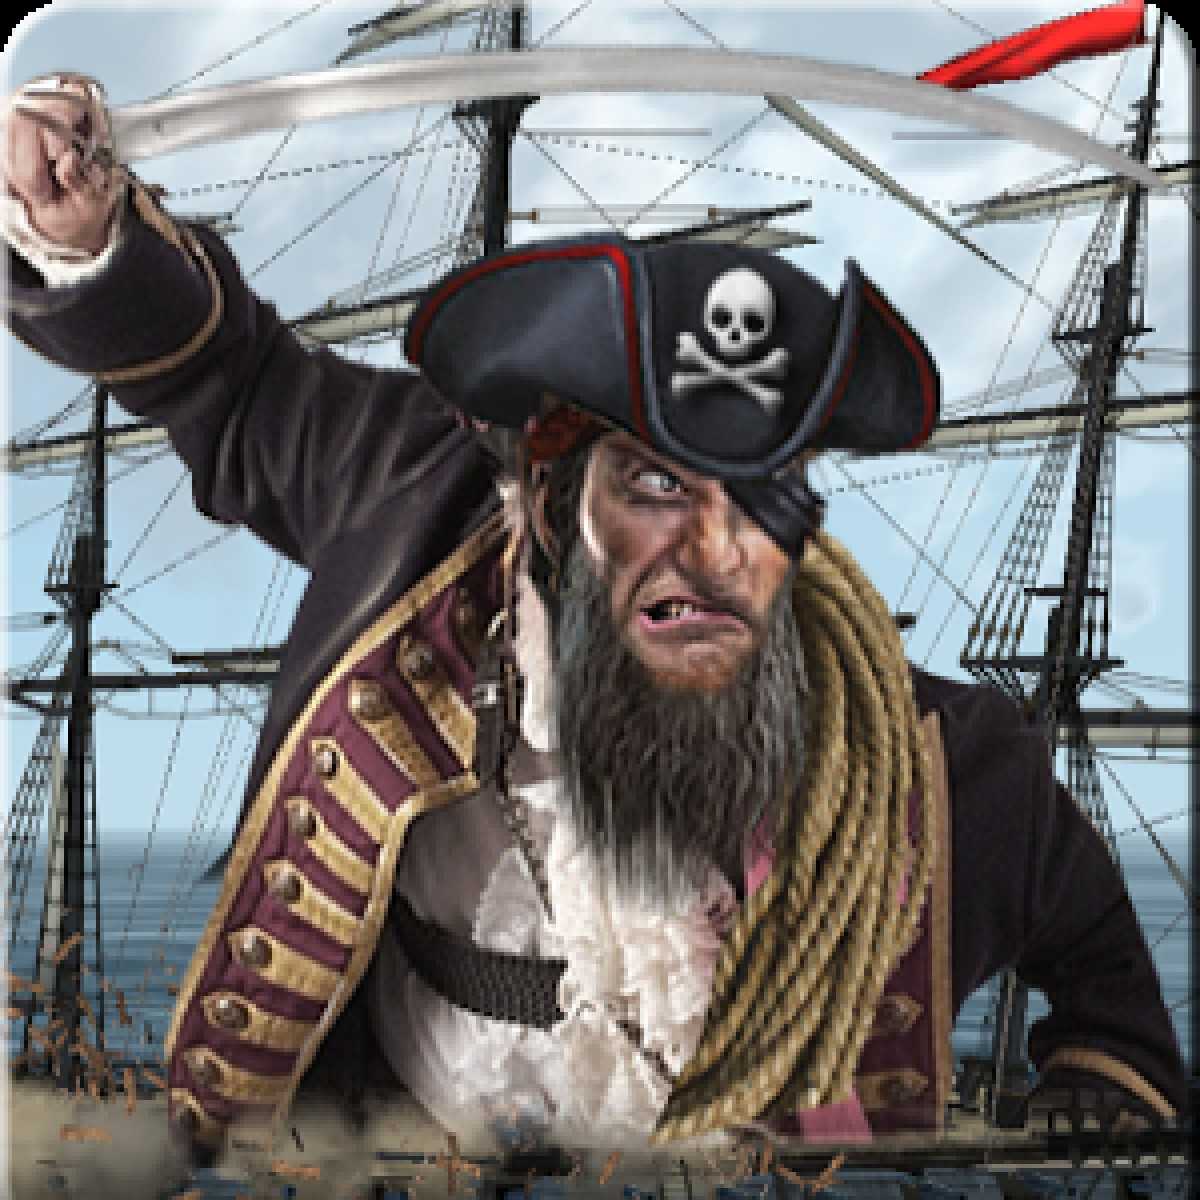 The Pirate: Caribbean Hunt v9.8 (Unlimited Money) APK